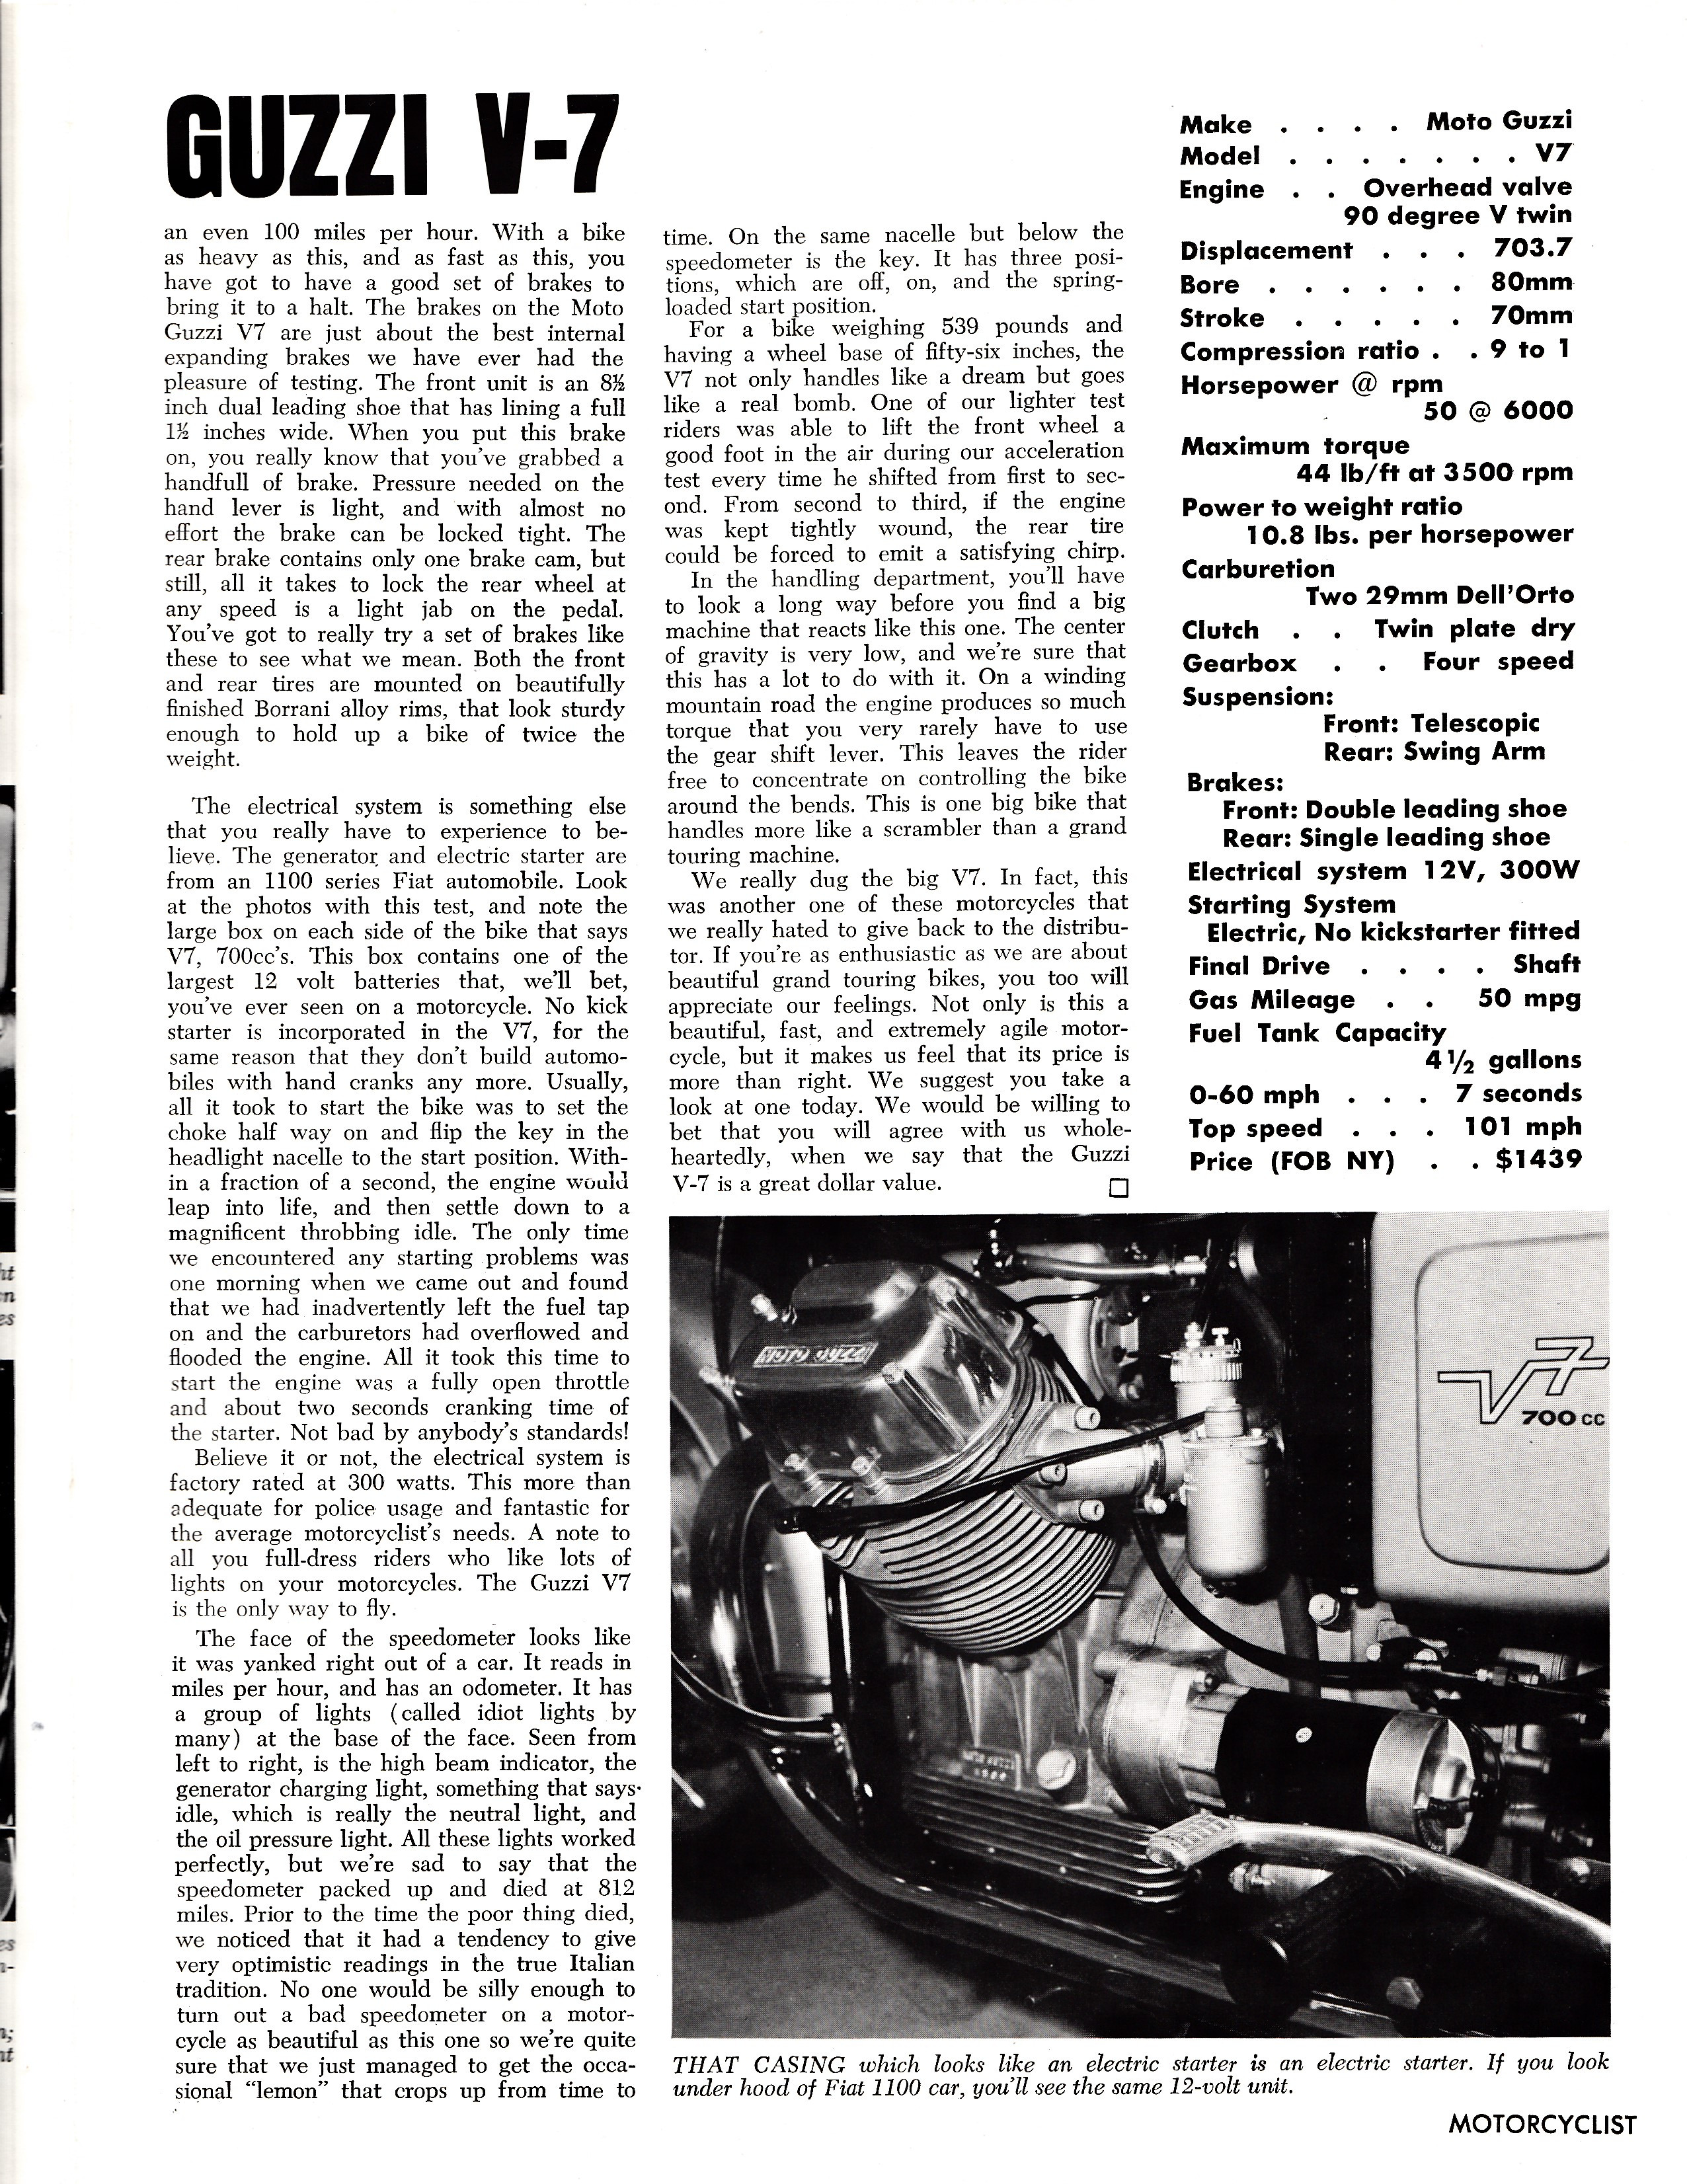 Moto Guzzi V700 factory brochure of magazine reviews, Page 7 of 8.